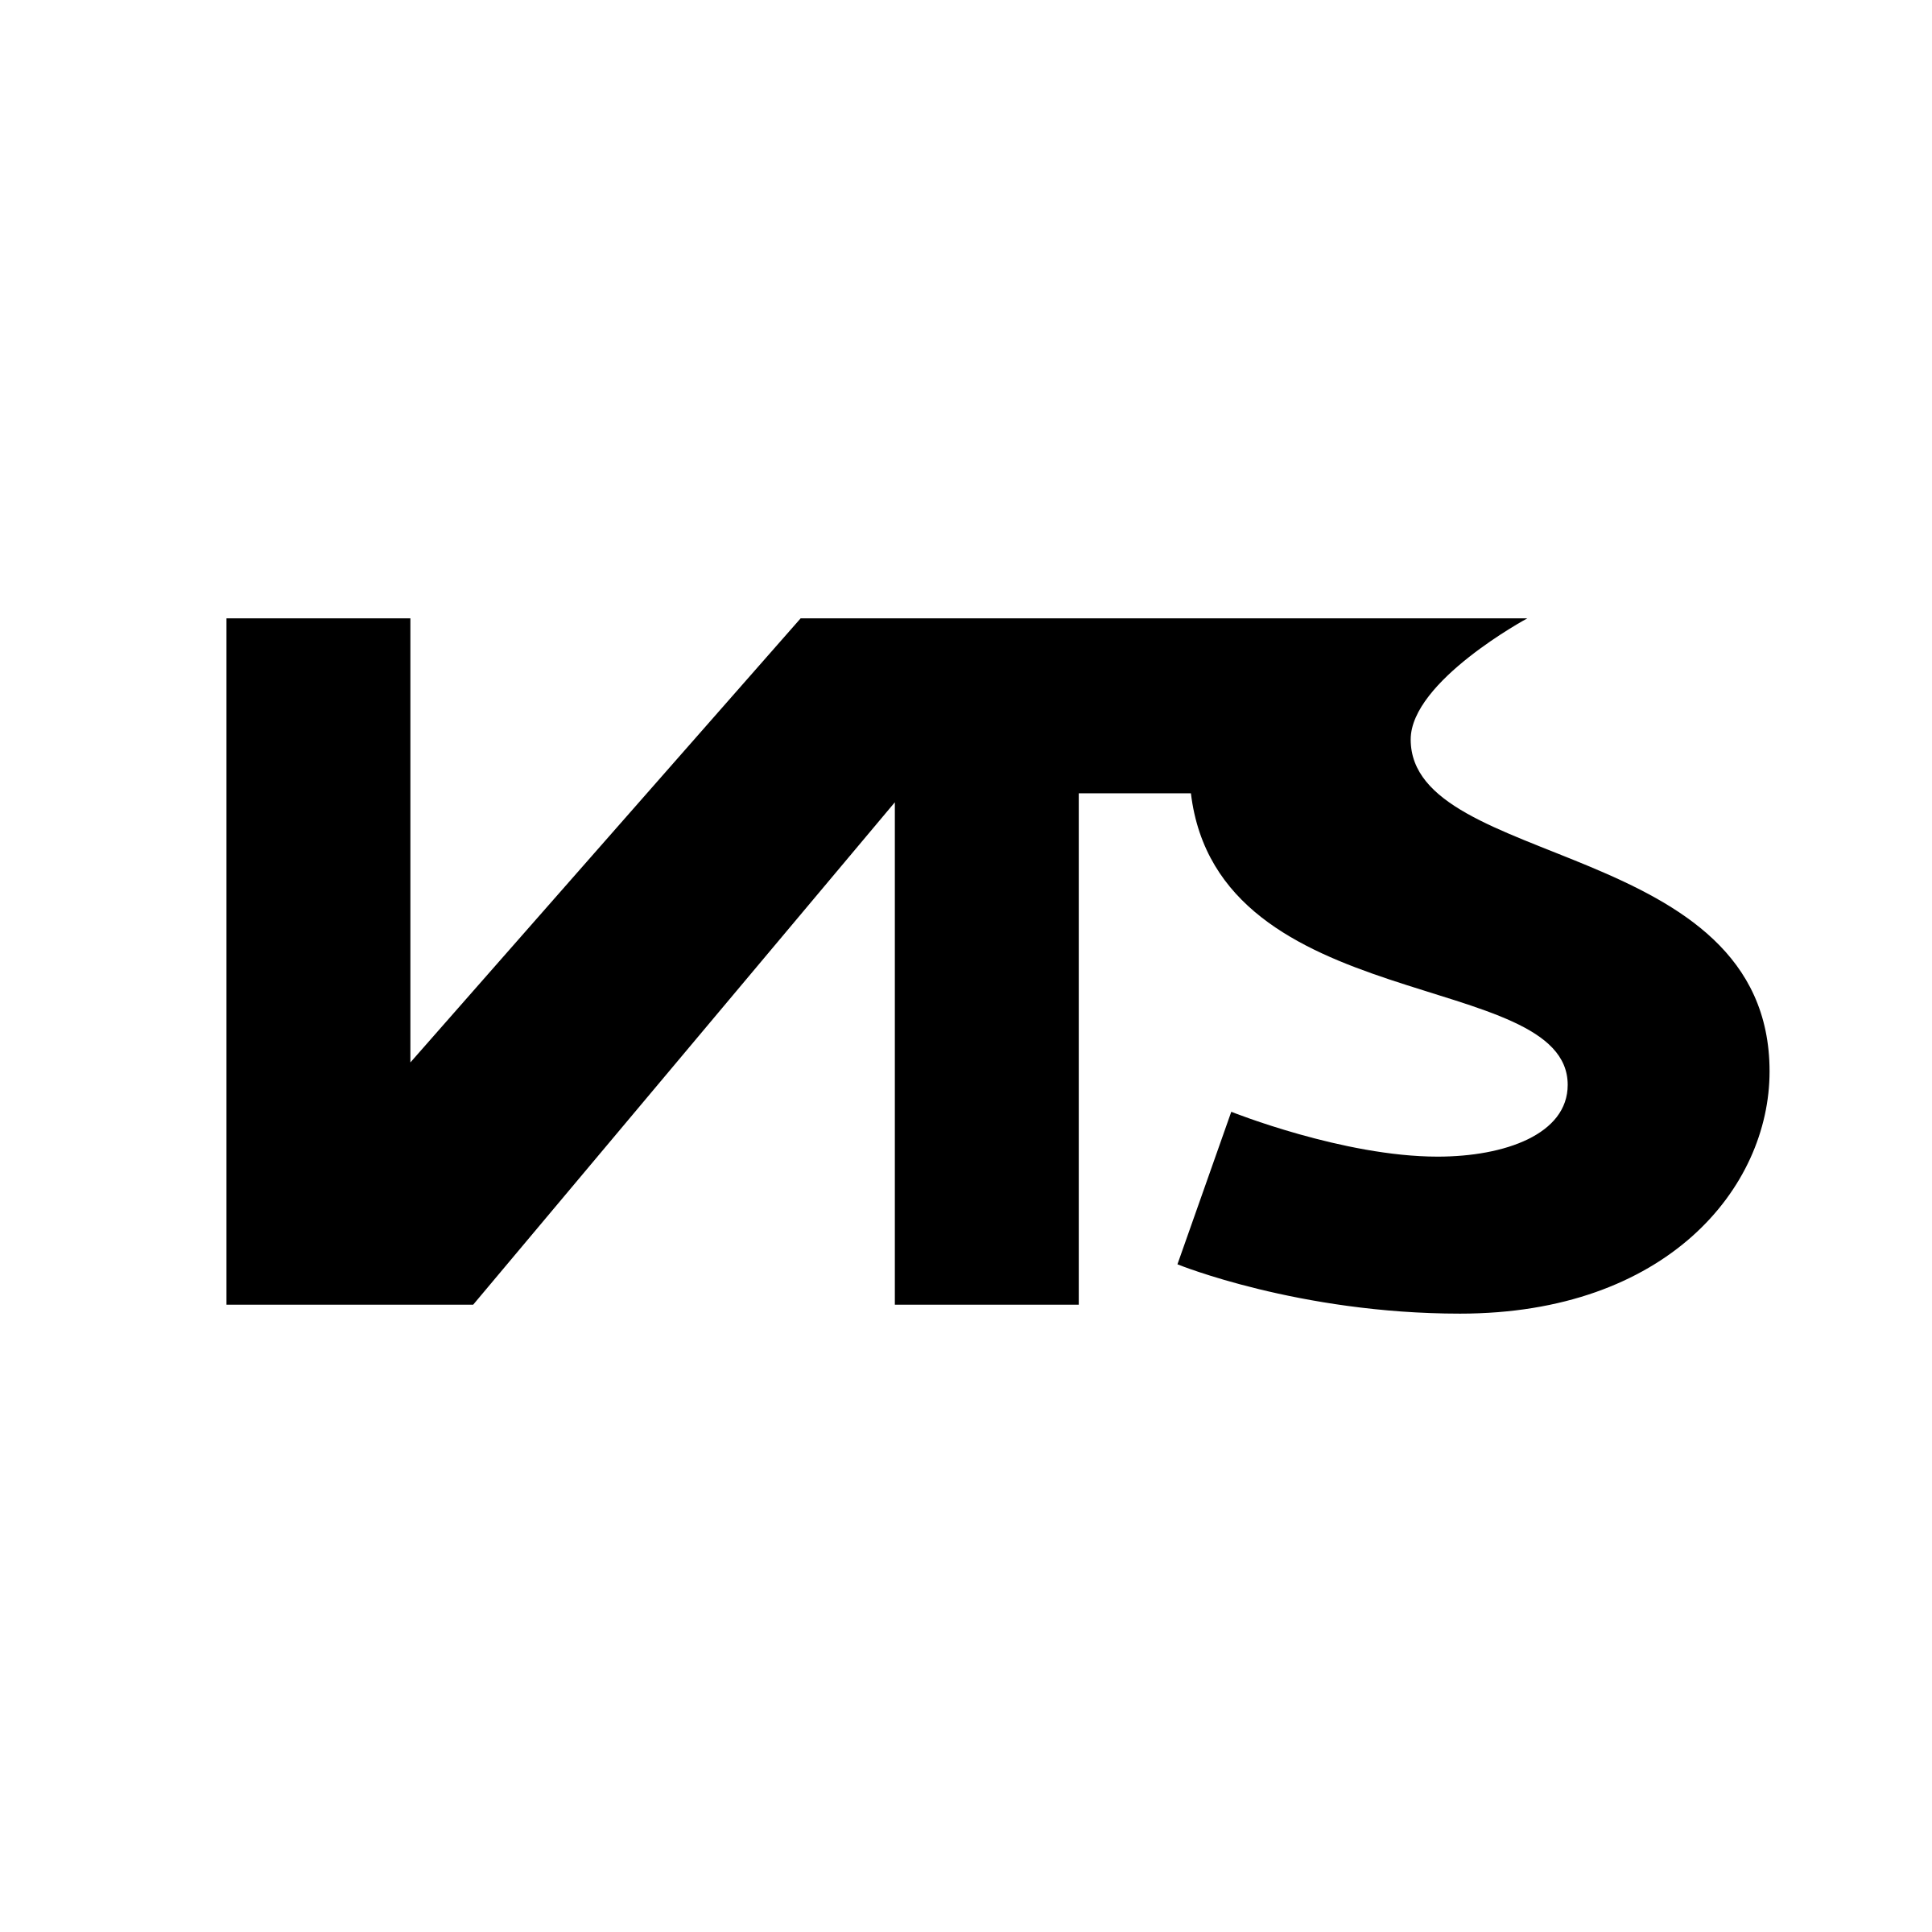 VTS Logo - VTS Logo PNG Transparent & SVG Vector - Freebie Supply